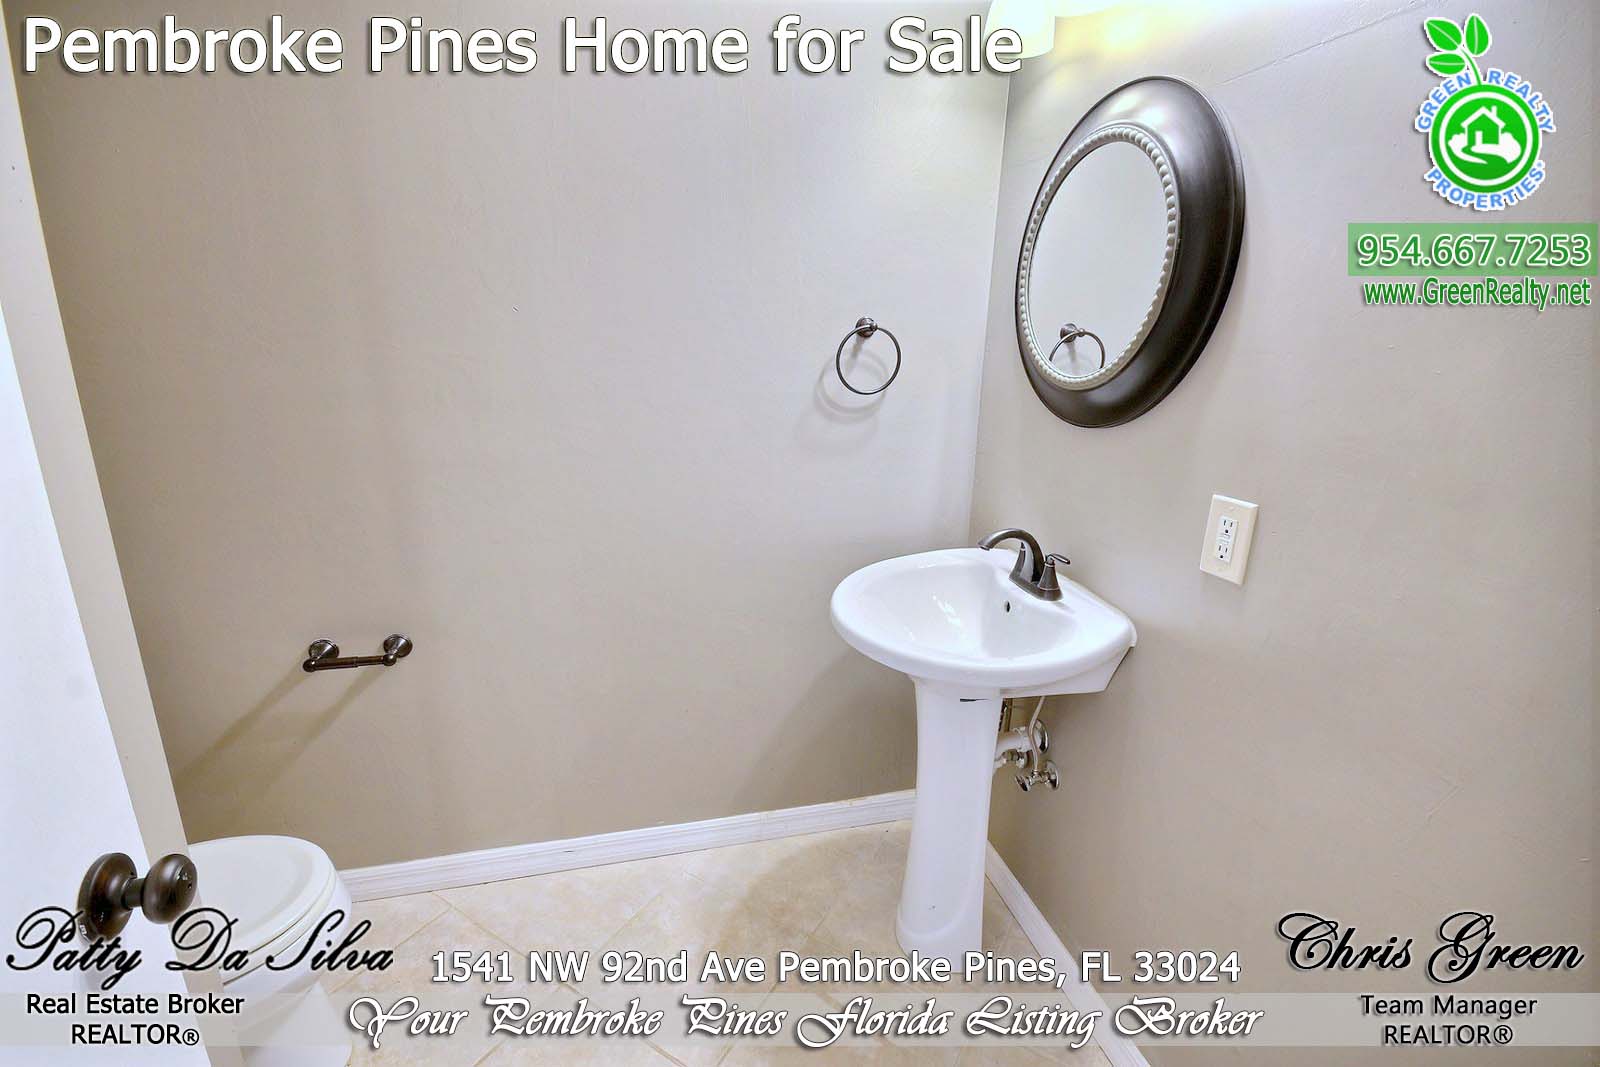 Pembroke Pines Real Estate Values